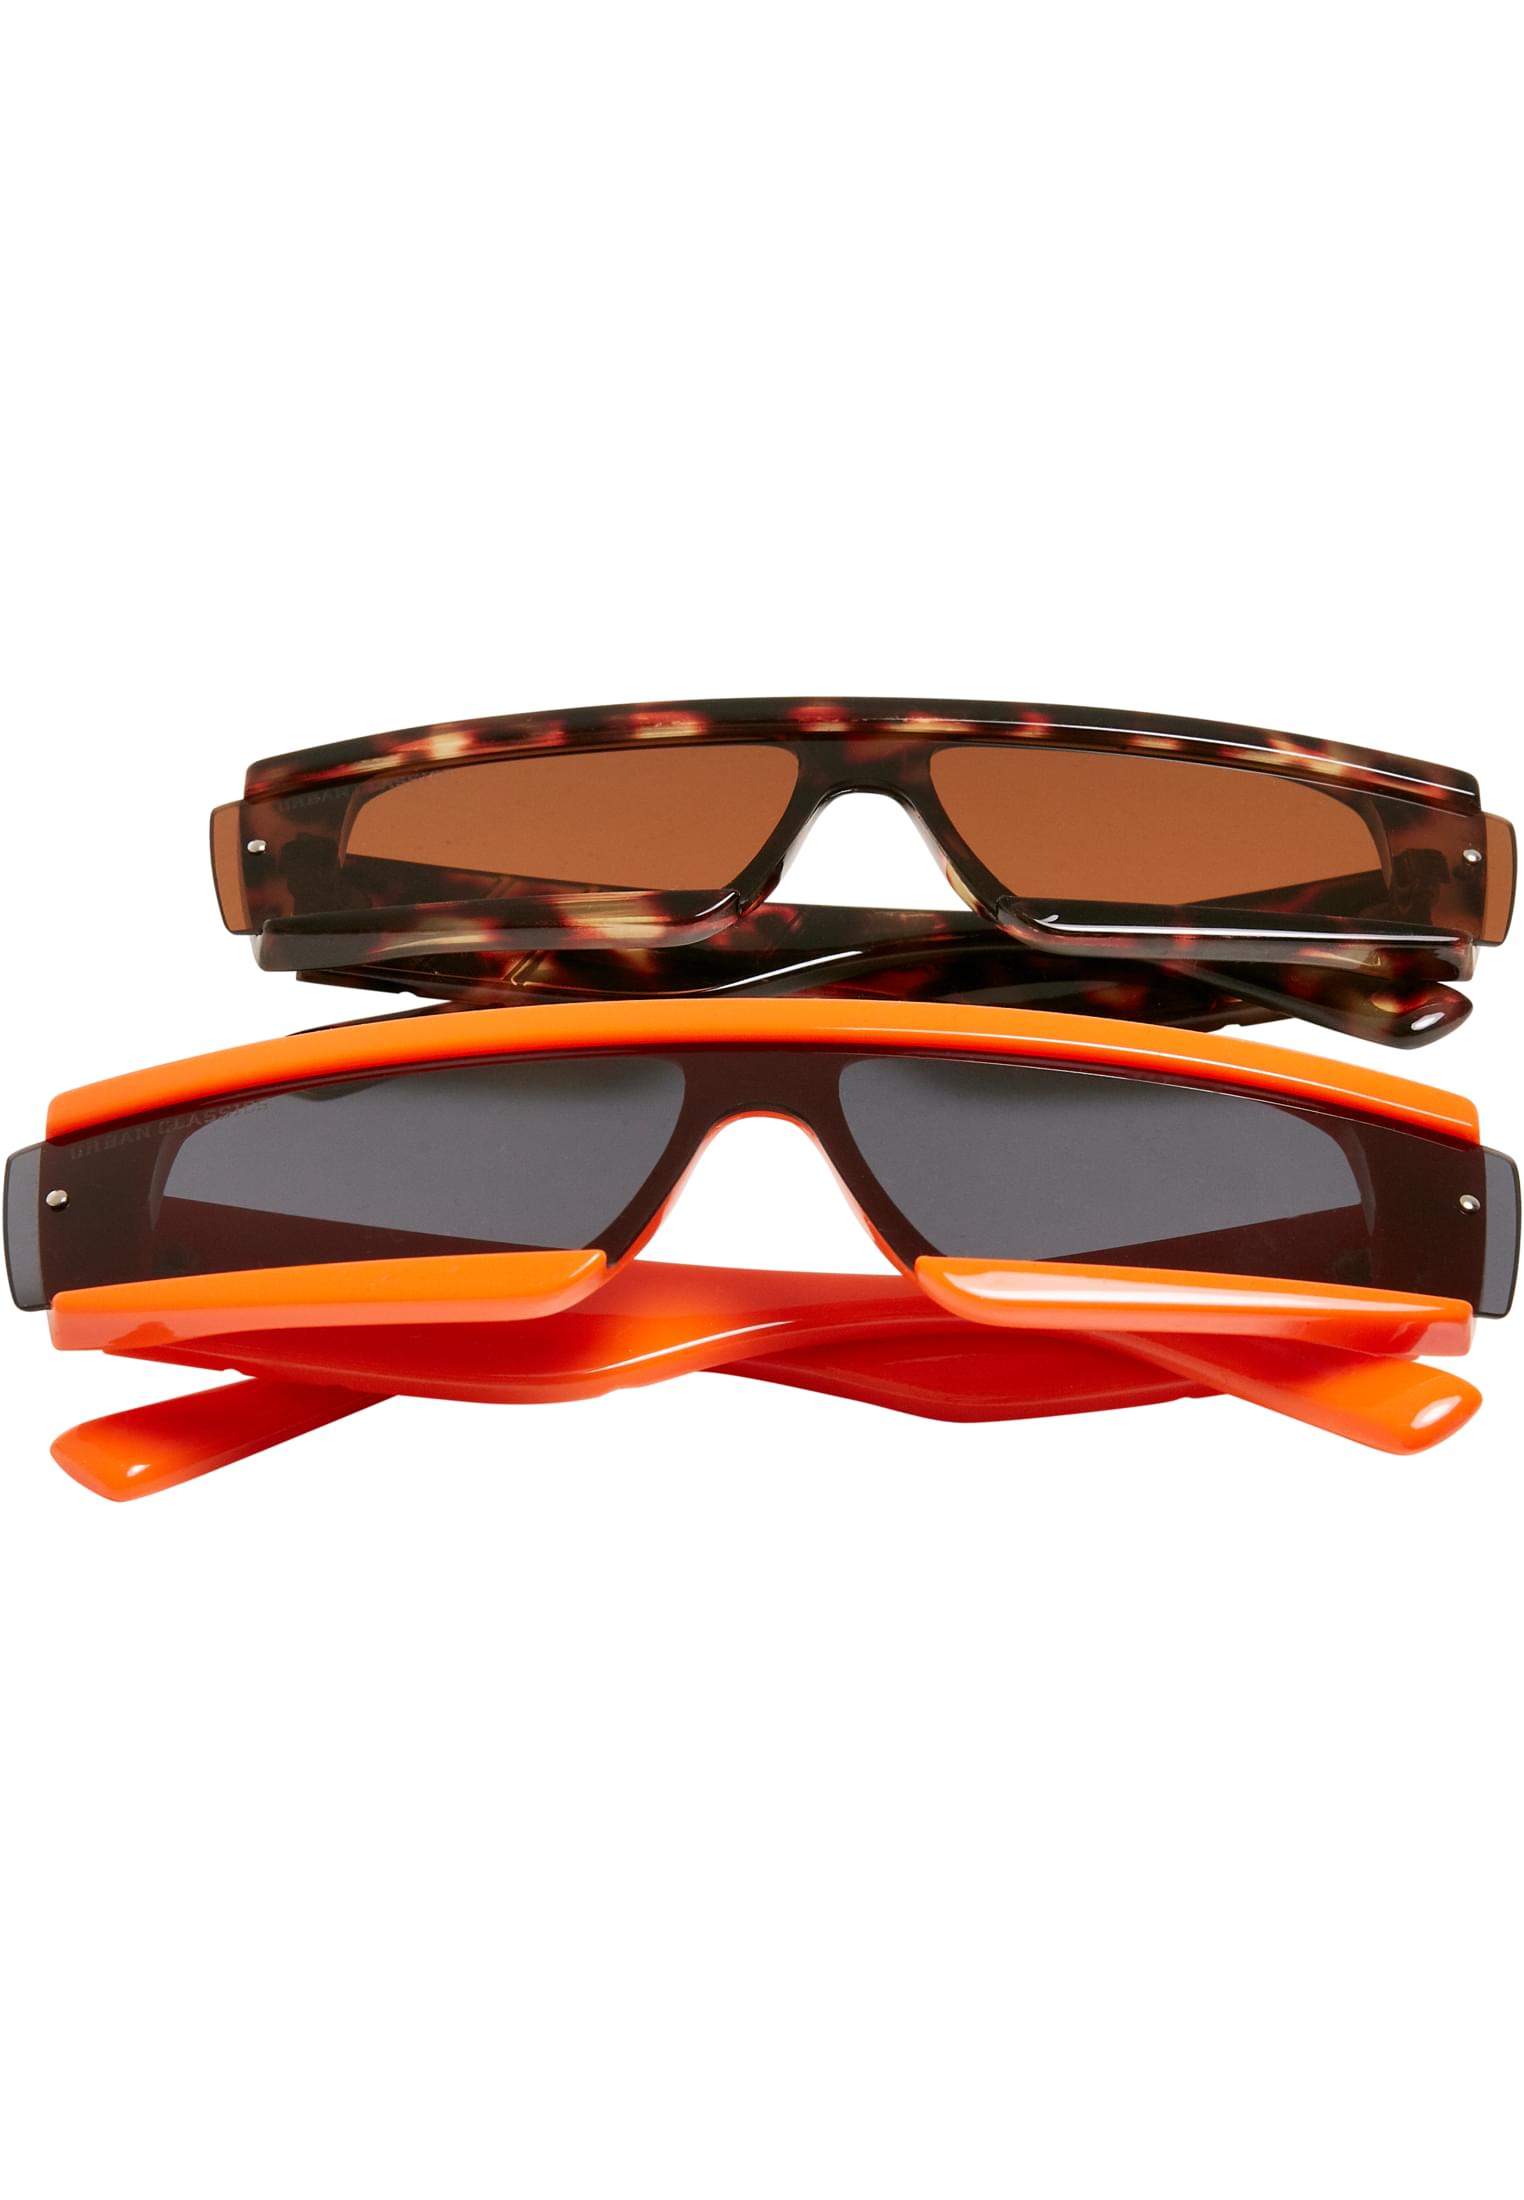 Sunglasses Alabama 2-Pack orange/brown